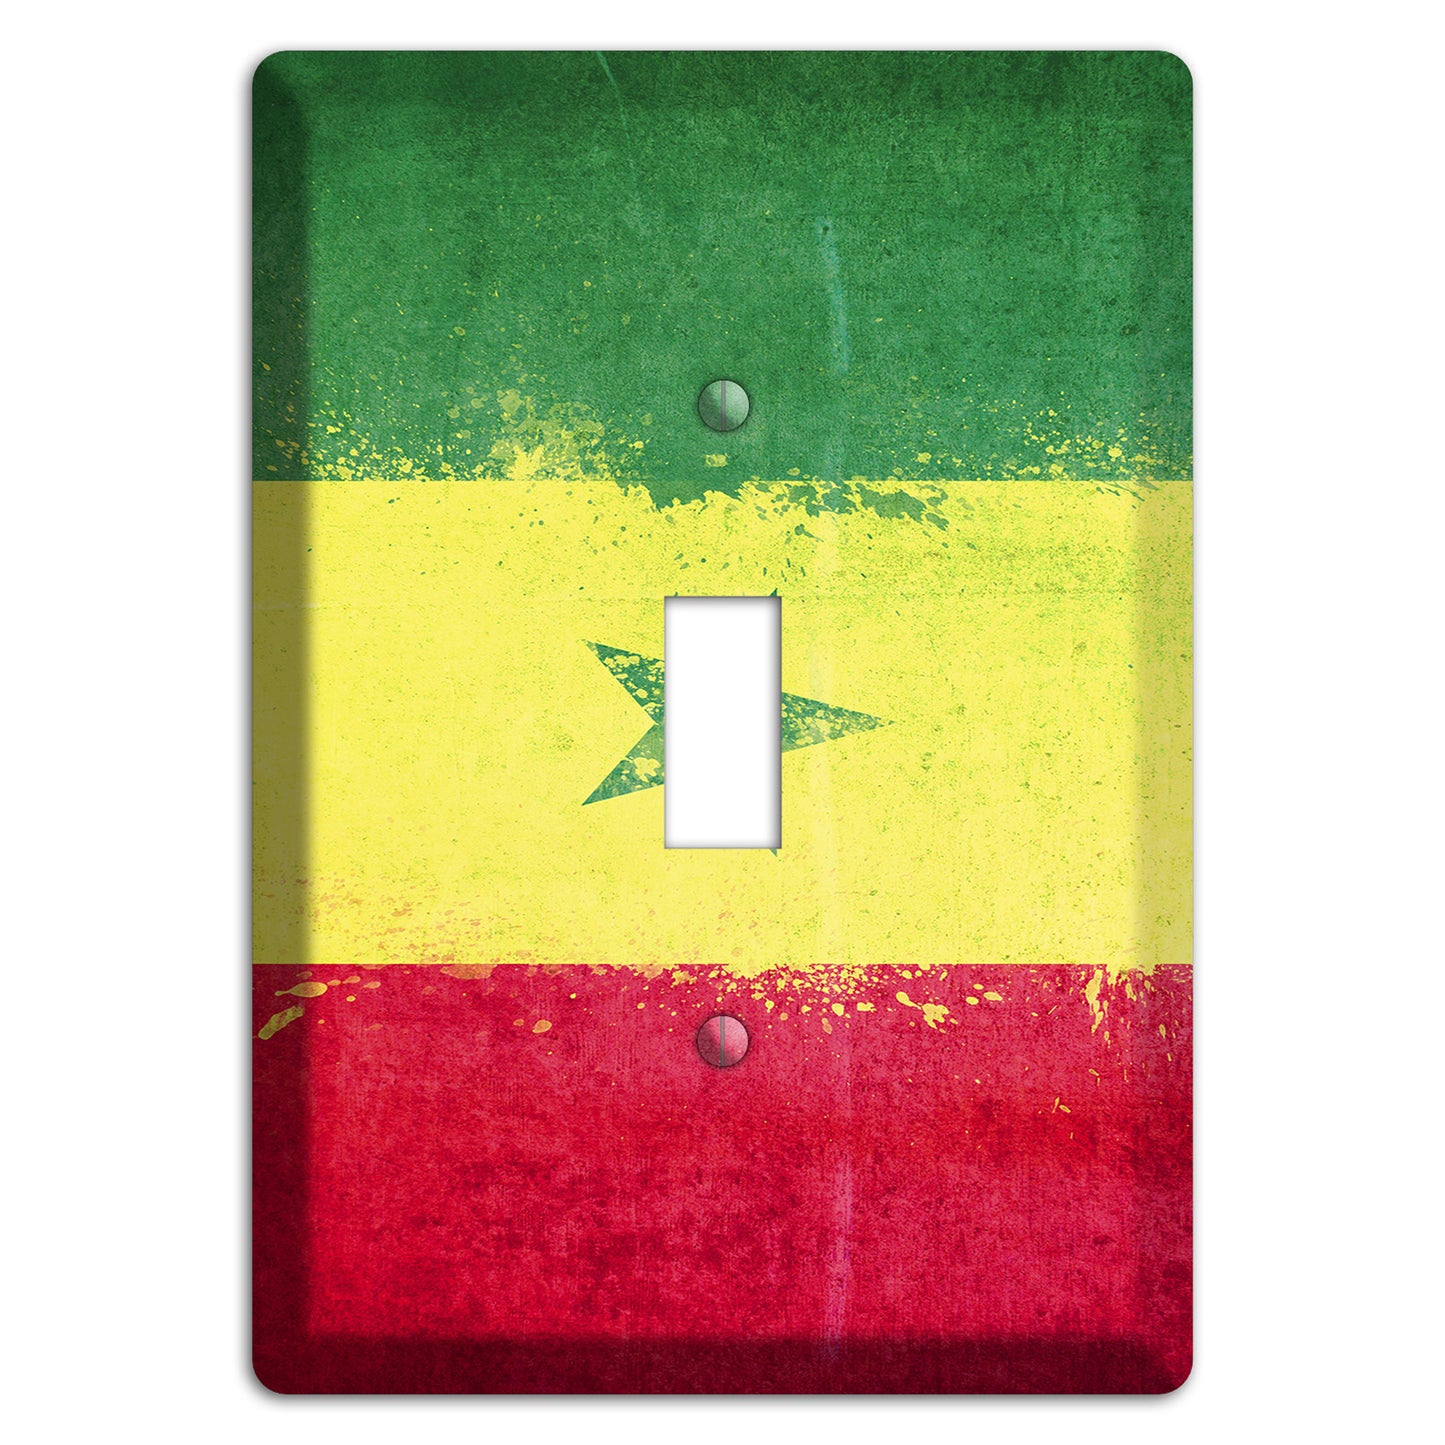 Senegal Cover Plates Cover Plates